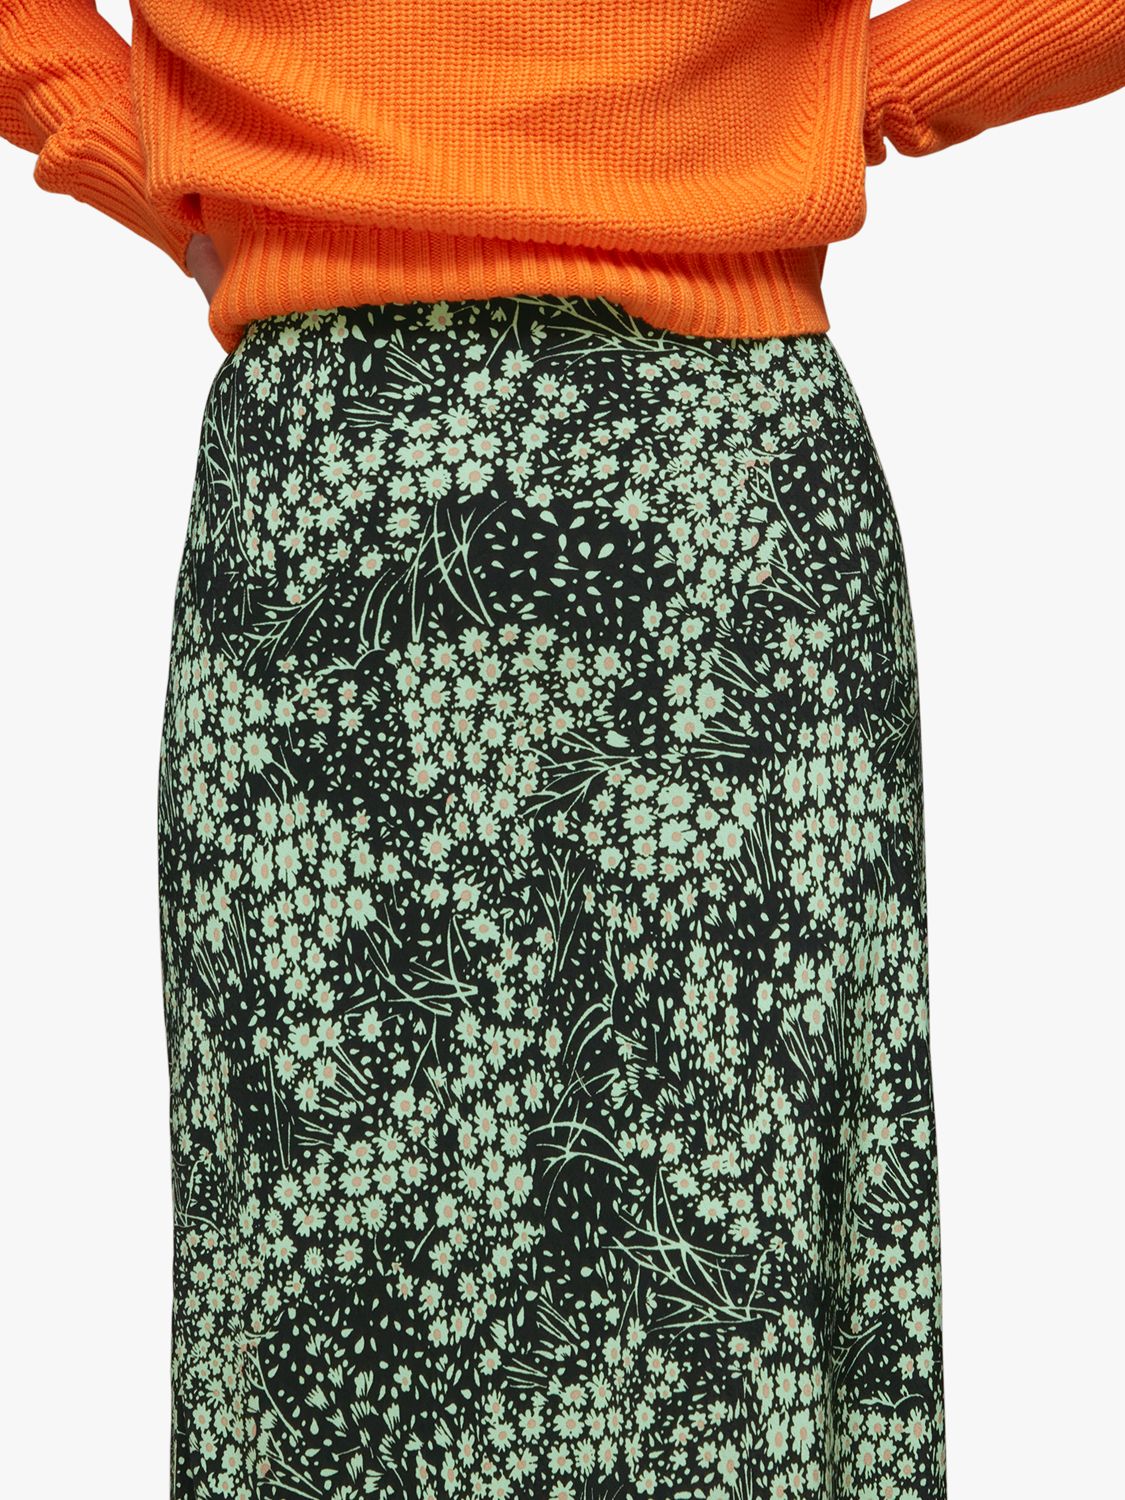 Whistles Daisy Meadow Slip Skirt, Green/Multi at John Lewis & Partners